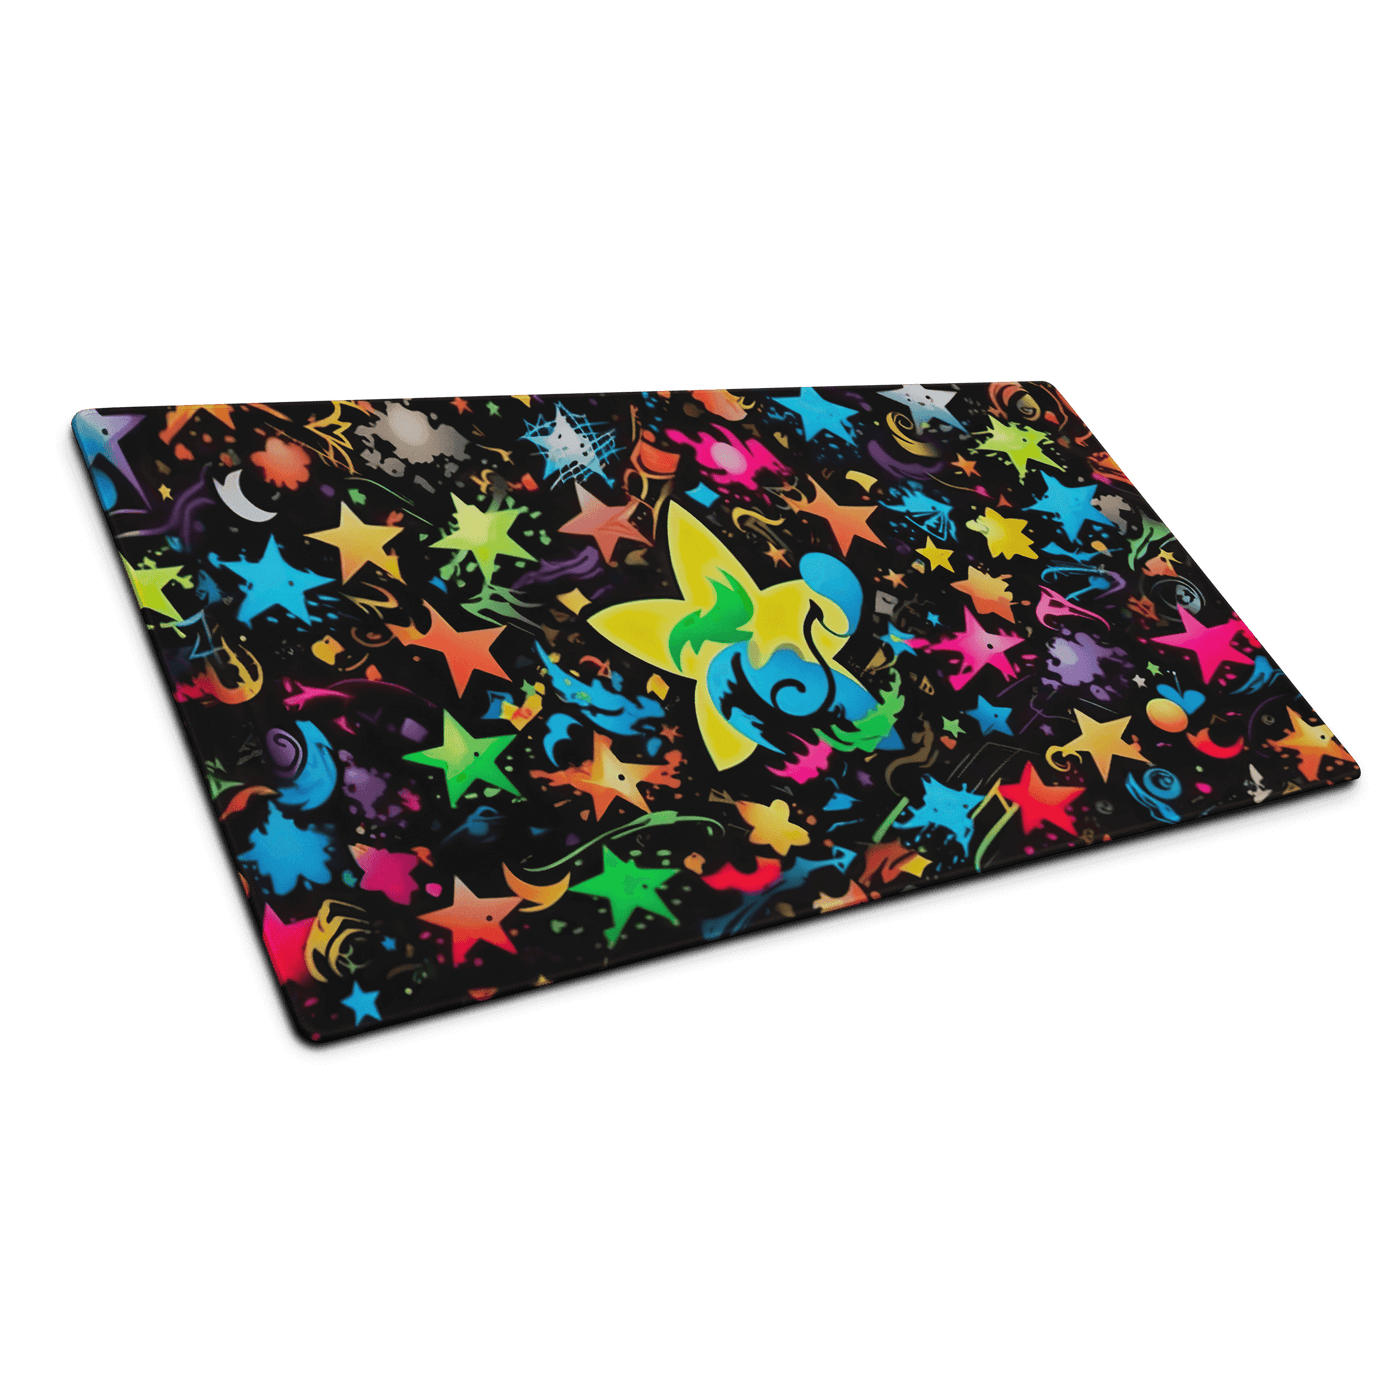 Premium Gaming Mouse Pad | Colorful Stars & Splatters